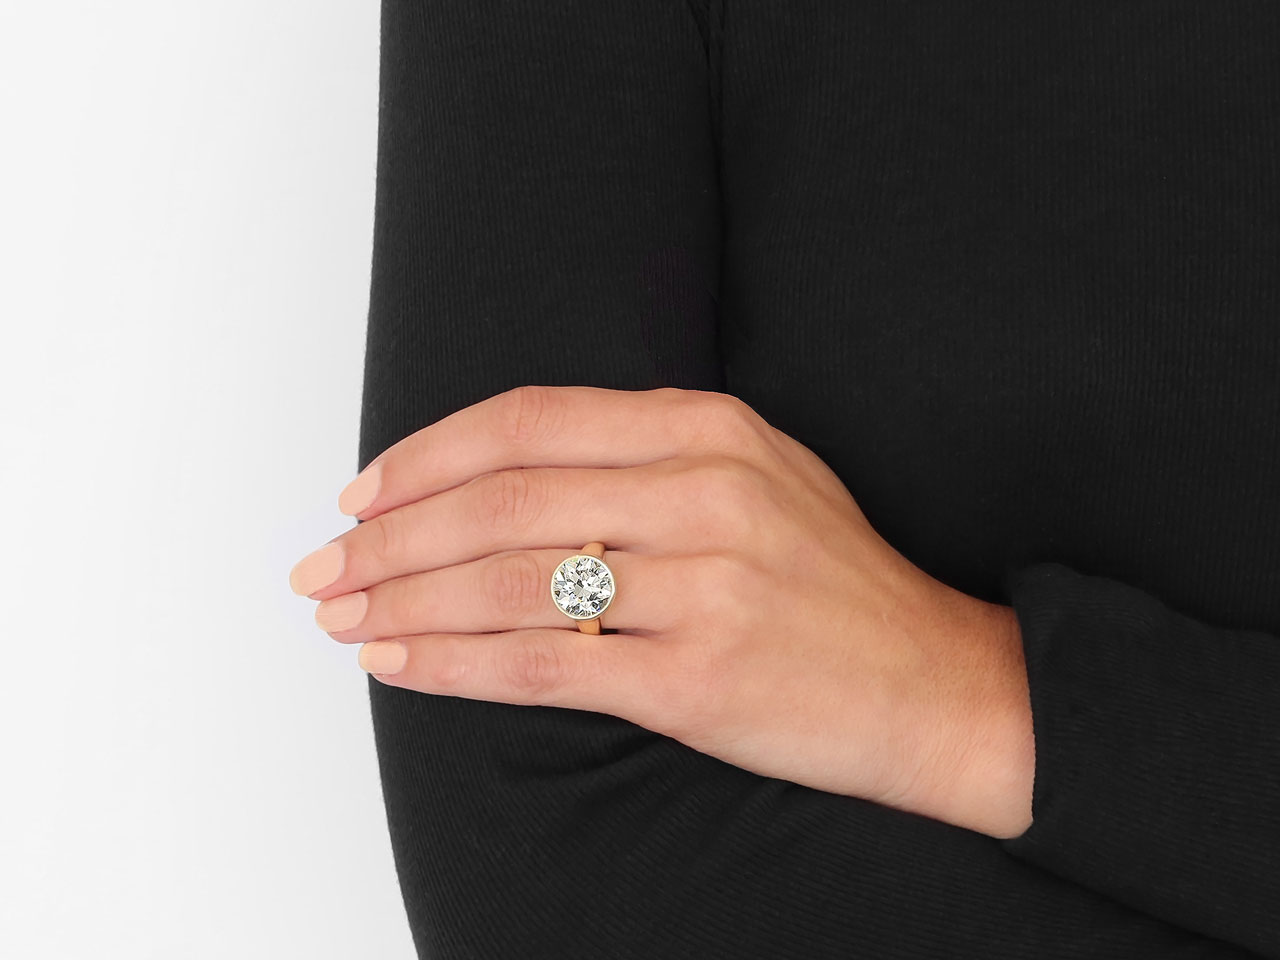 Beladora 'Bespoke' Bezel-set Diamond, 7.09 carats, in 18K Gold